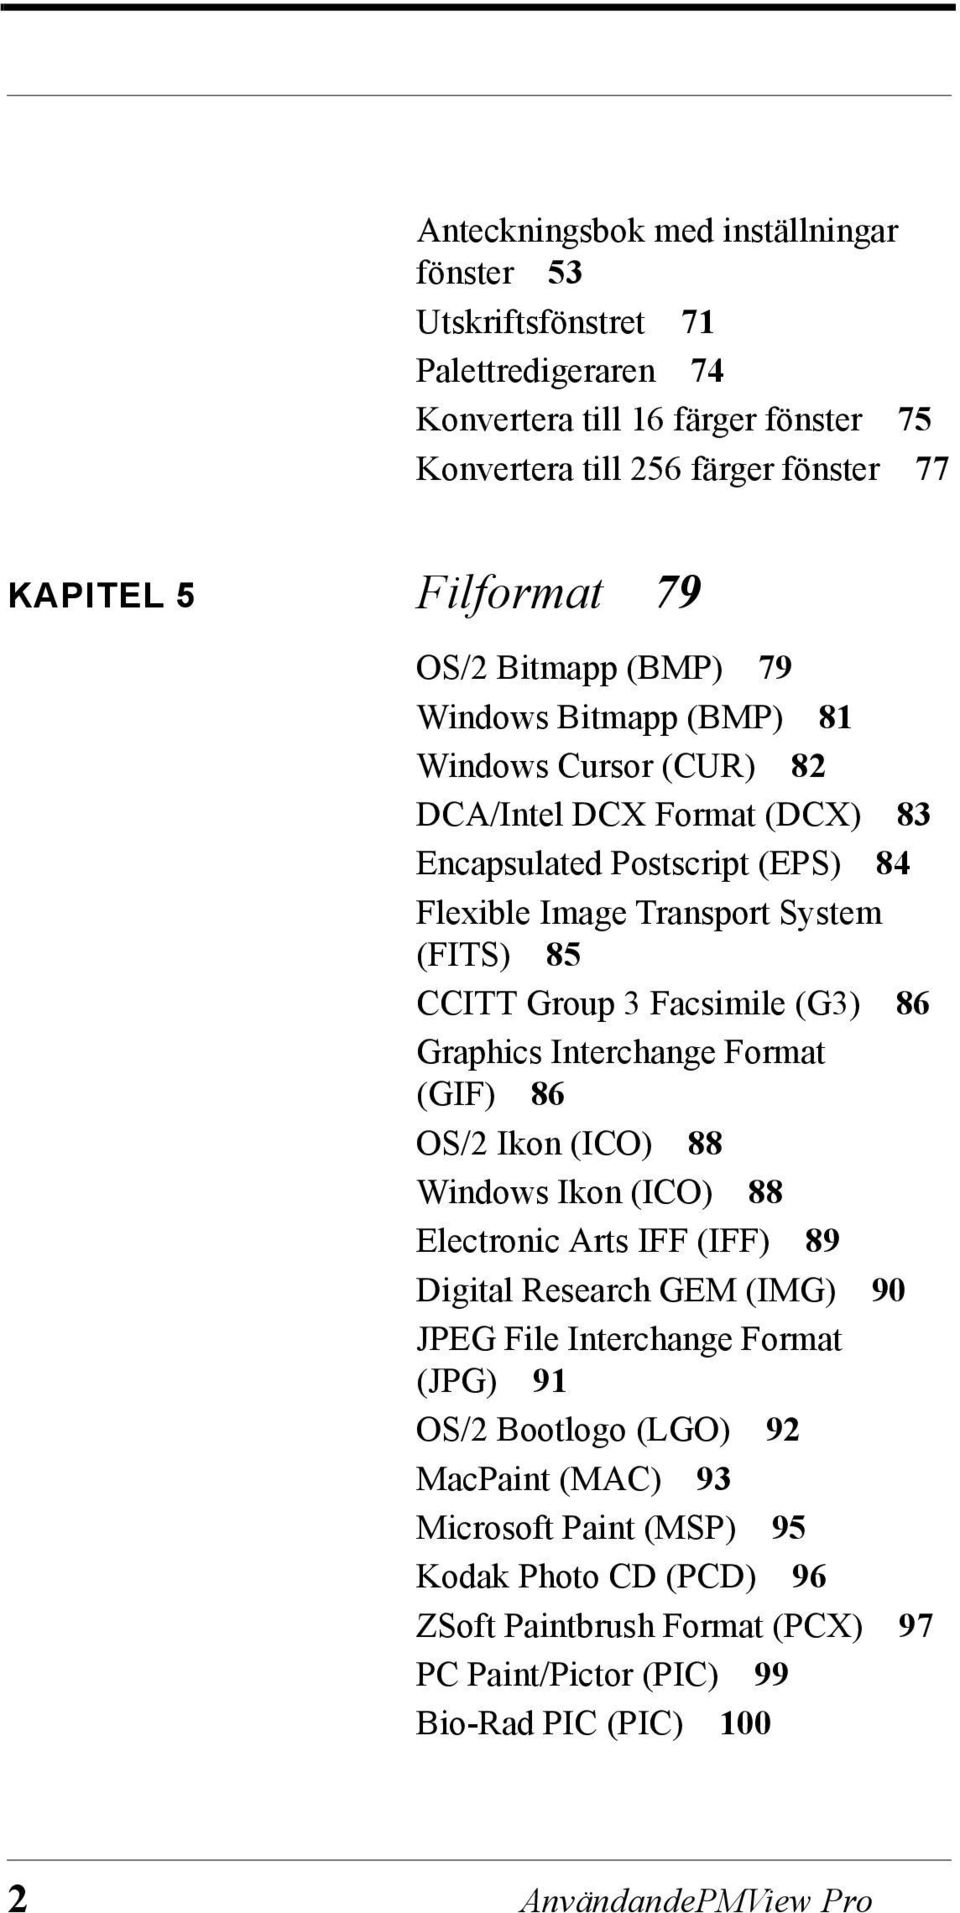 Facsimile (G3) 86 Graphics Interchange Format (GIF) 86 OS/2 Ikon (ICO) 88 Windows Ikon (ICO) 88 Electronic Arts IFF (IFF) 89 Digital Research GEM (IMG) 90 JPEG File Interchange Format (JPG)